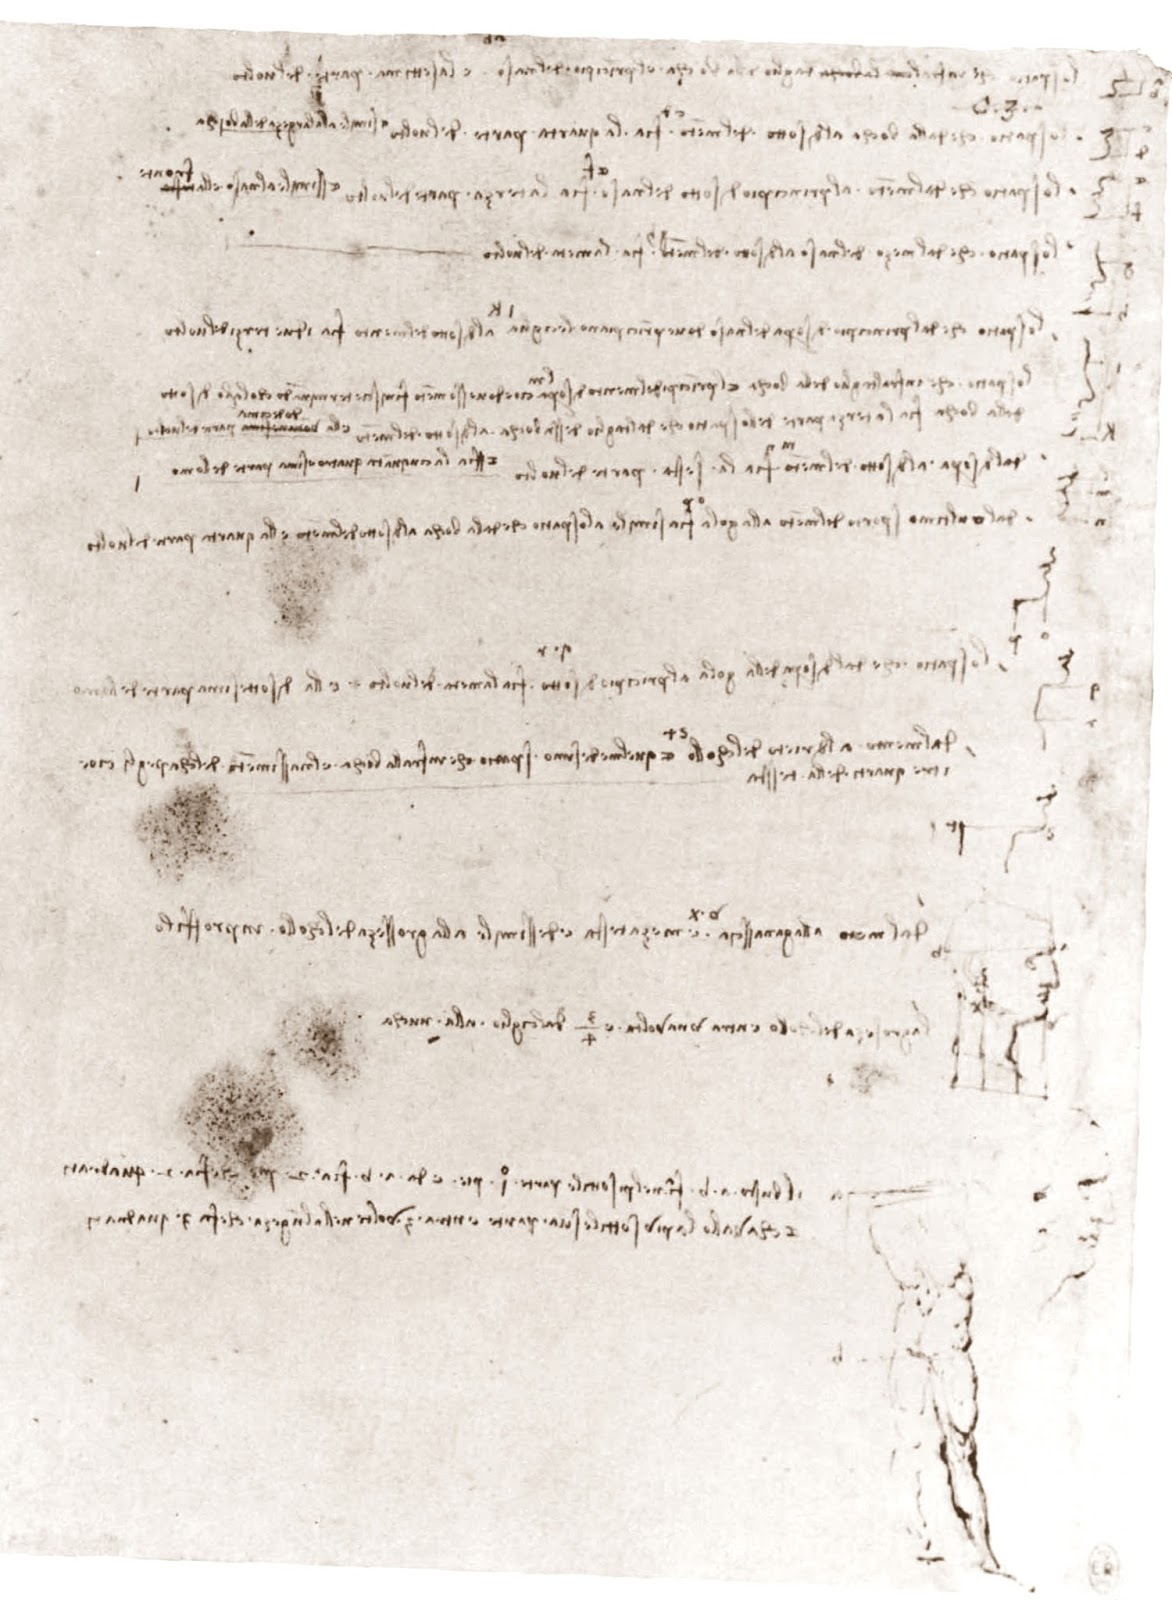 Leonardo+da+Vinci-1452-1519 (819).jpg